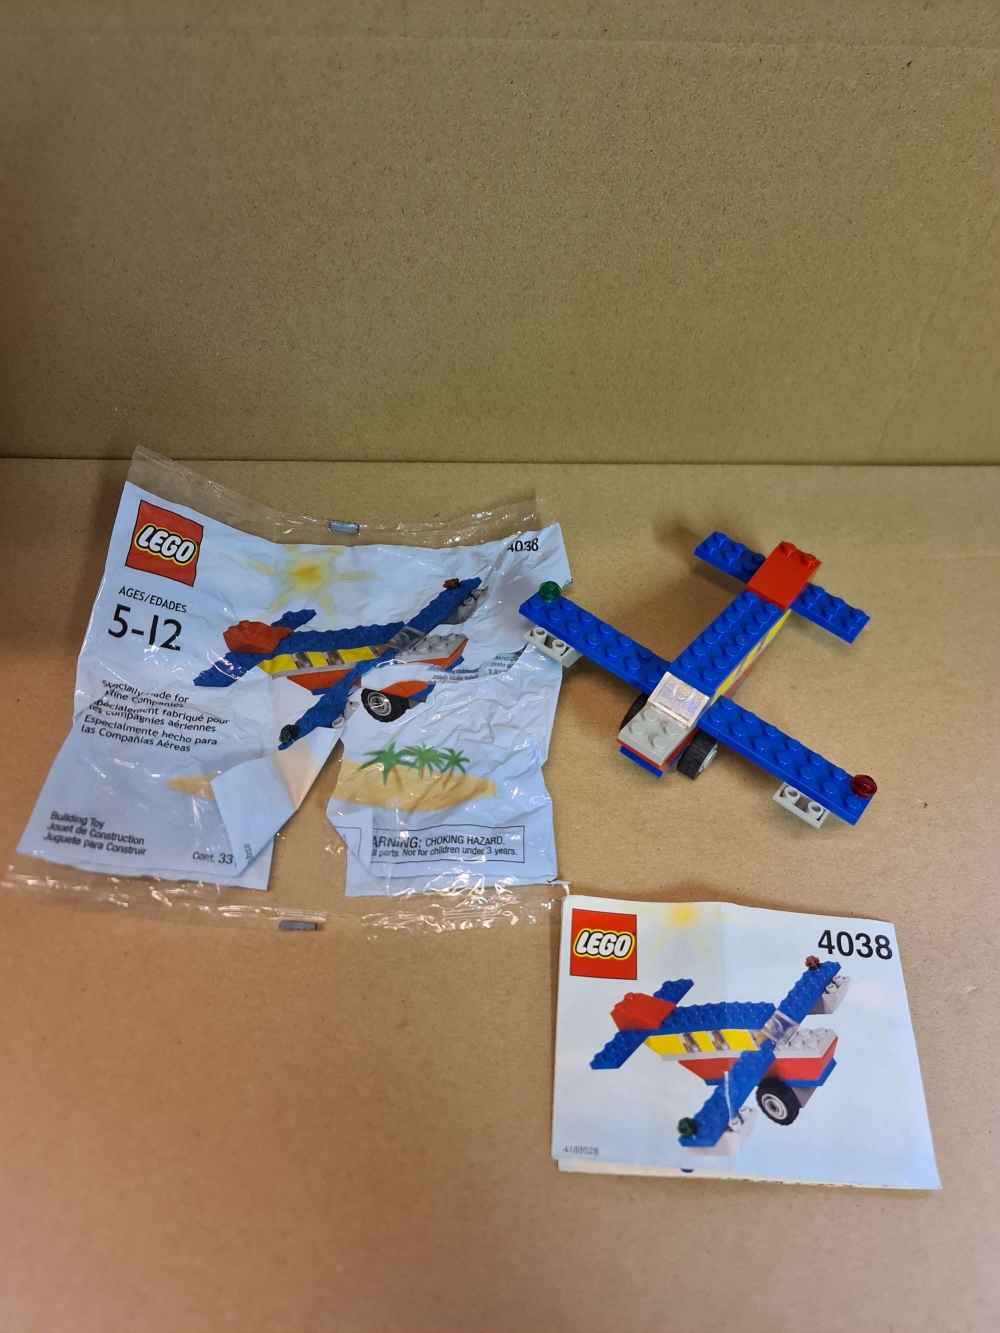 Sett 4038 fra Lego Universal Building Set serien
Som nytt.
Komplett med manual.